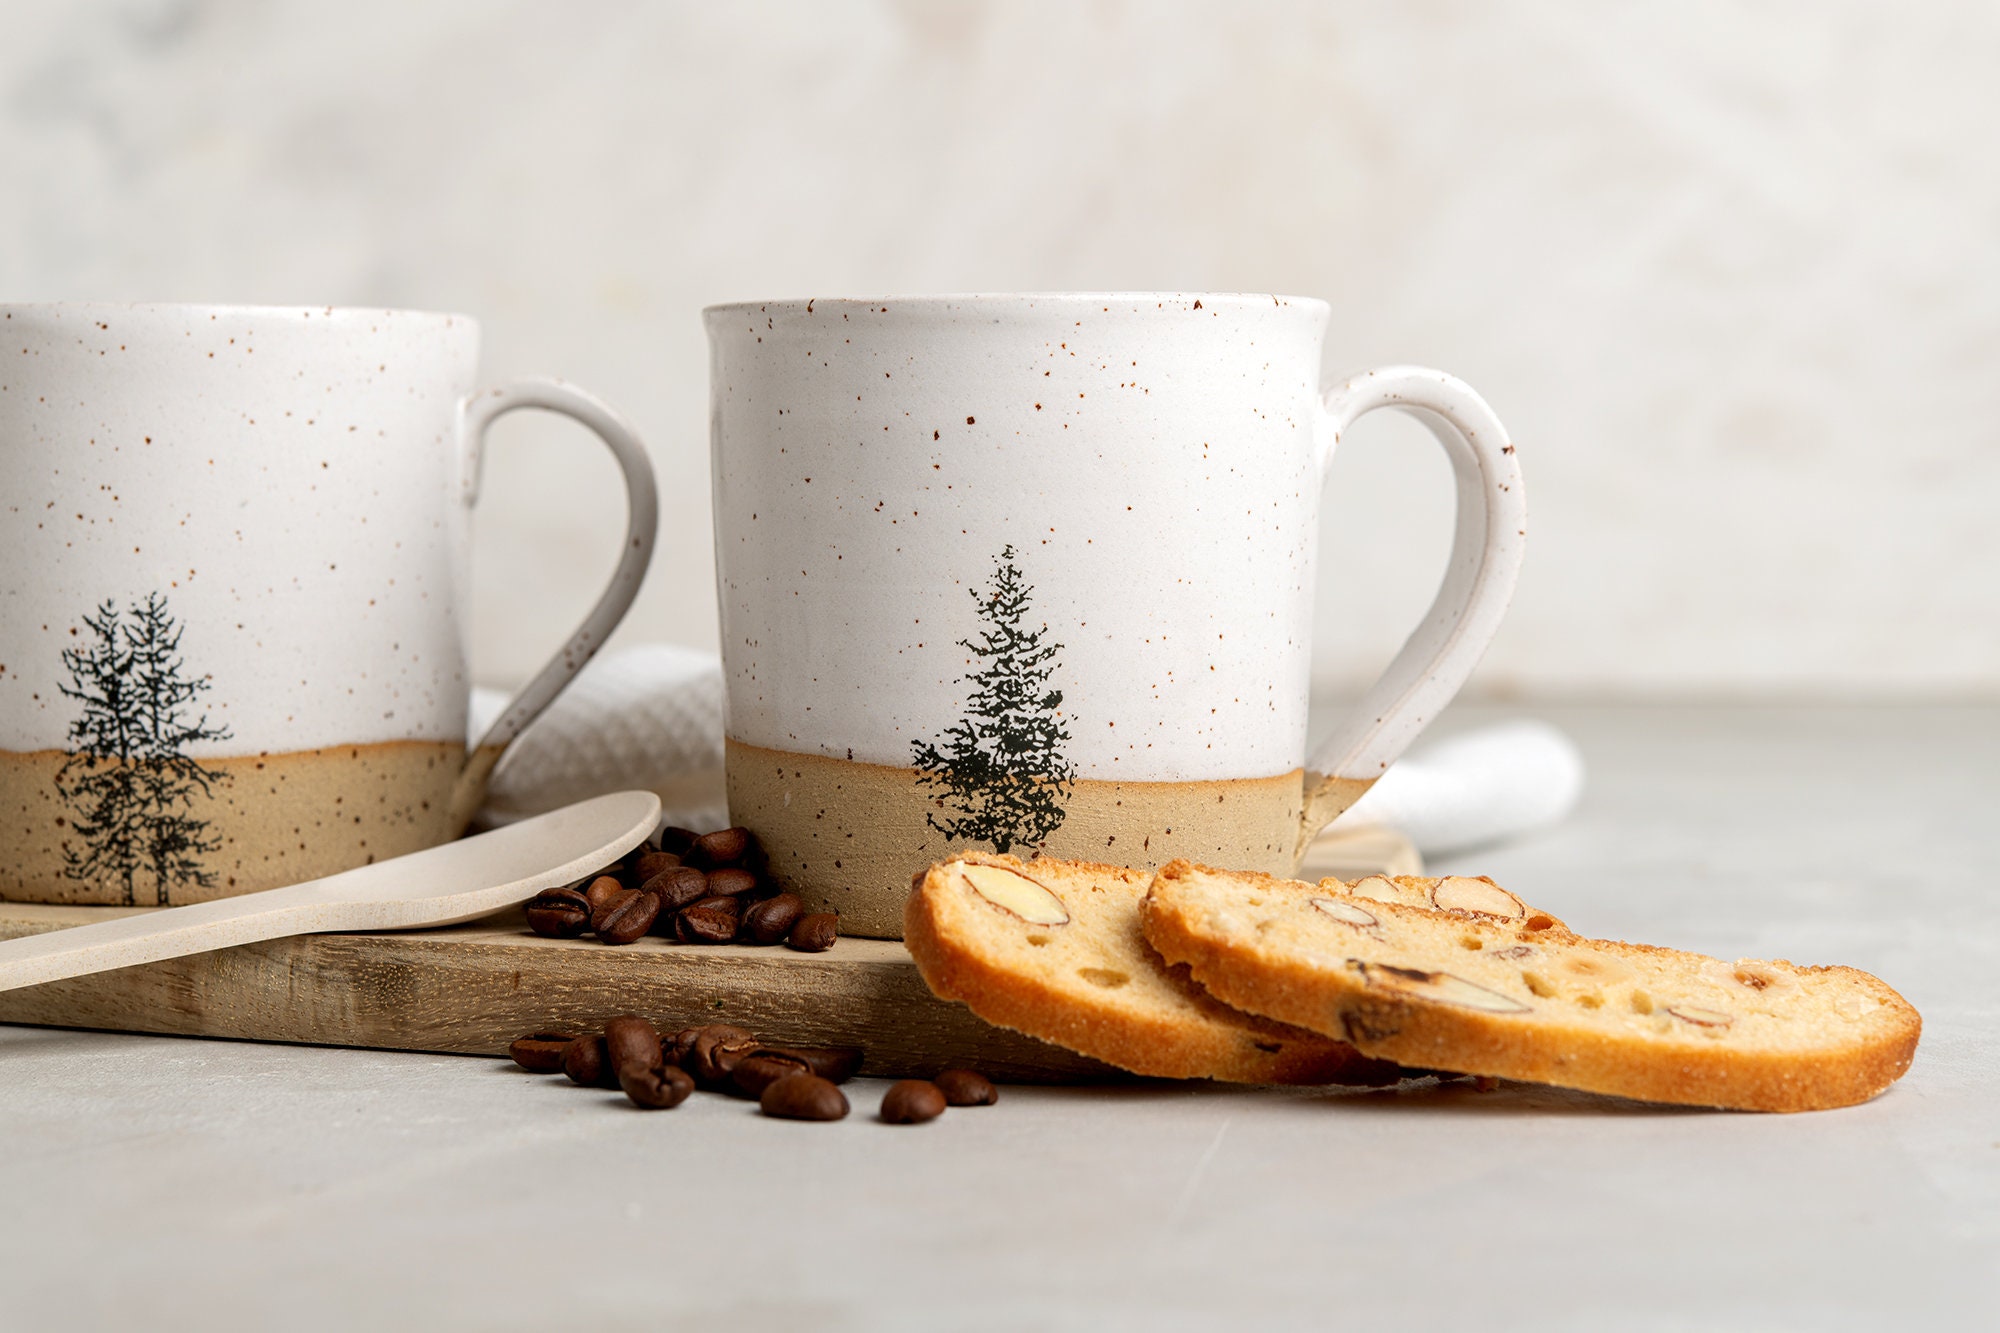 ODIINCY Coffee Mugs Set of 4, Christmas Handmade Aesthetic Coffee Mugs Tea Cups for Office and Home, Artsy Ceramic Coffee Mugs for Women Men, Red 